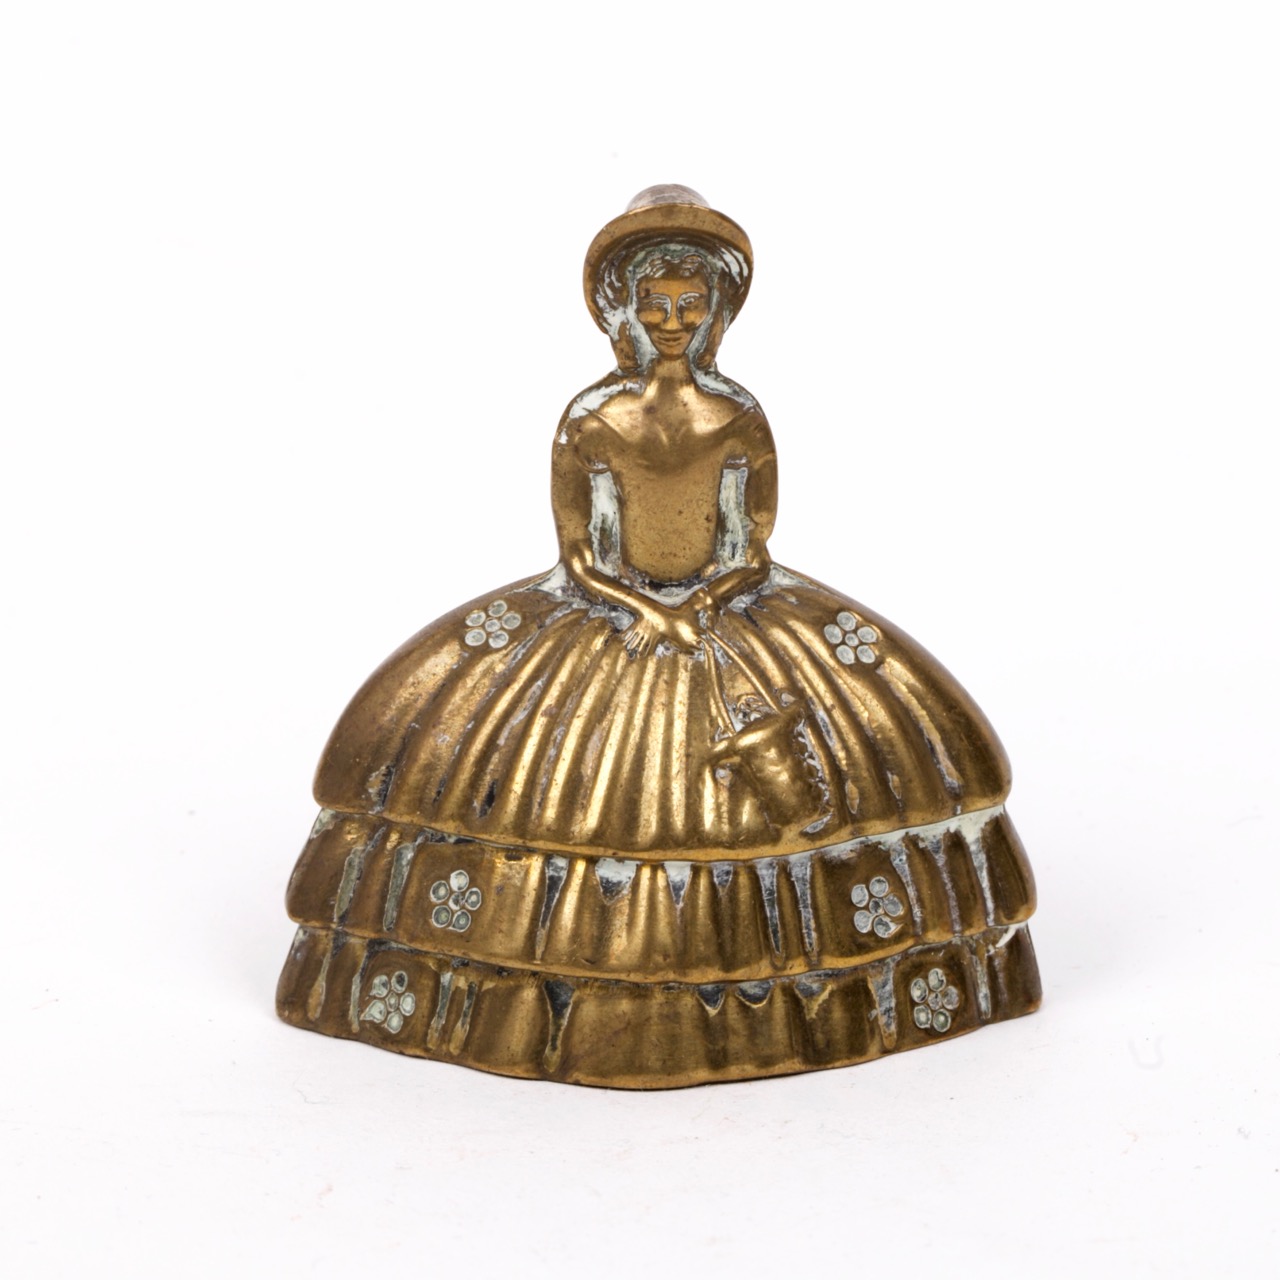 Antique brass bell in a shape of a women